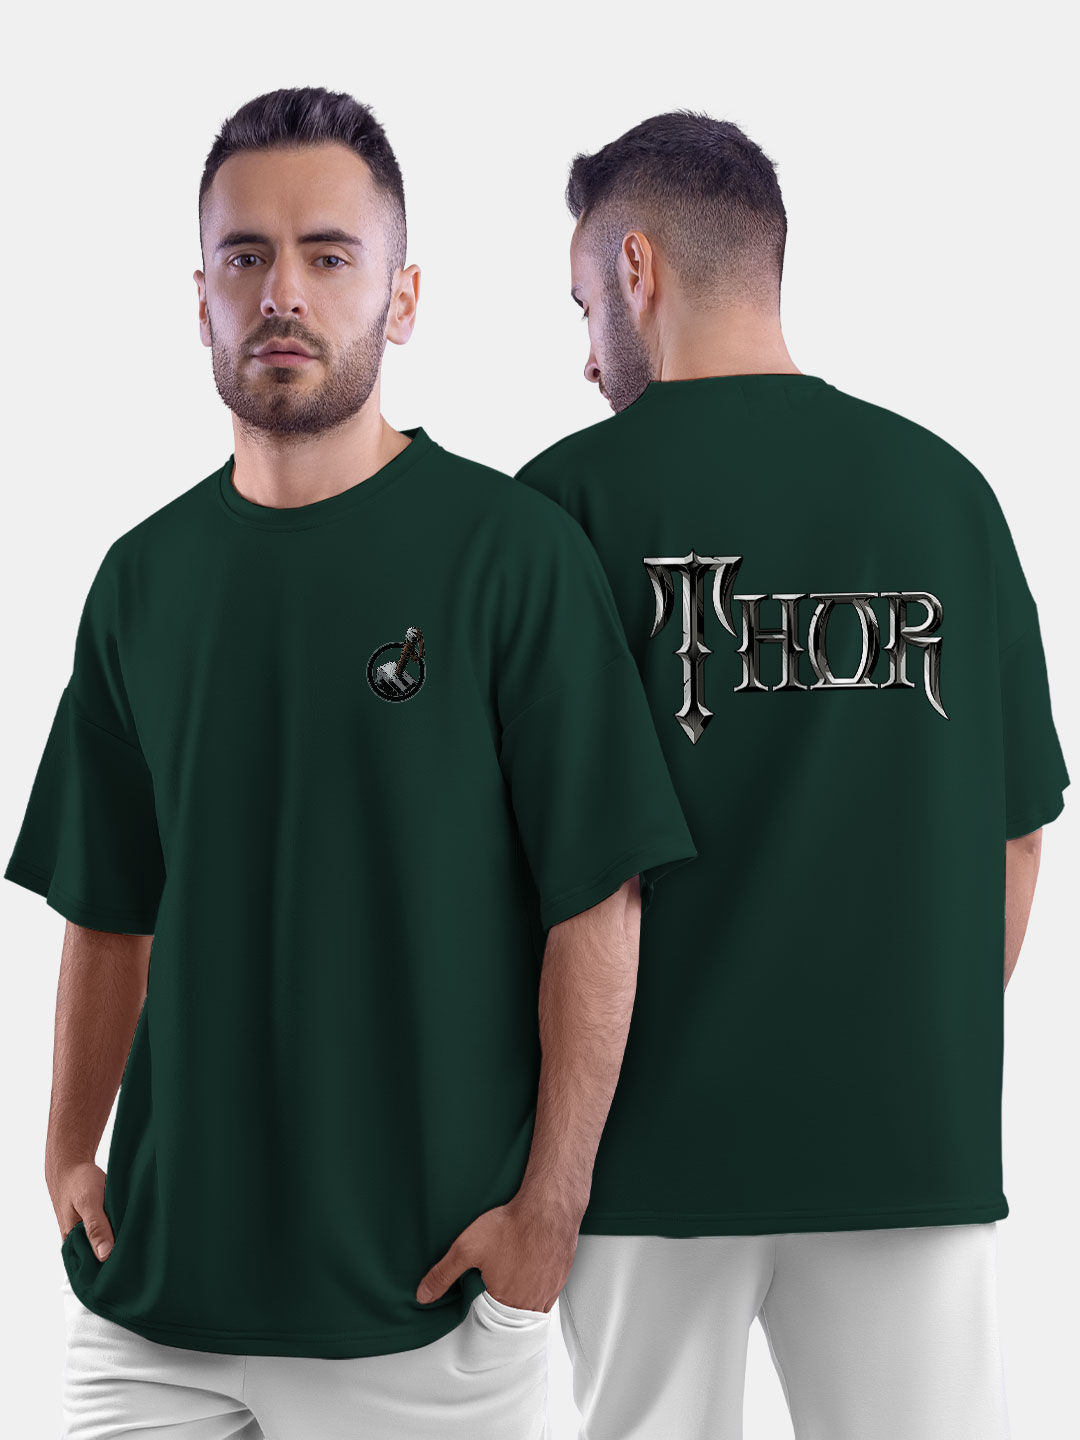 Buy Comic Thor Mjolnir - Male Oversized T-Shirt T-Shirts Online